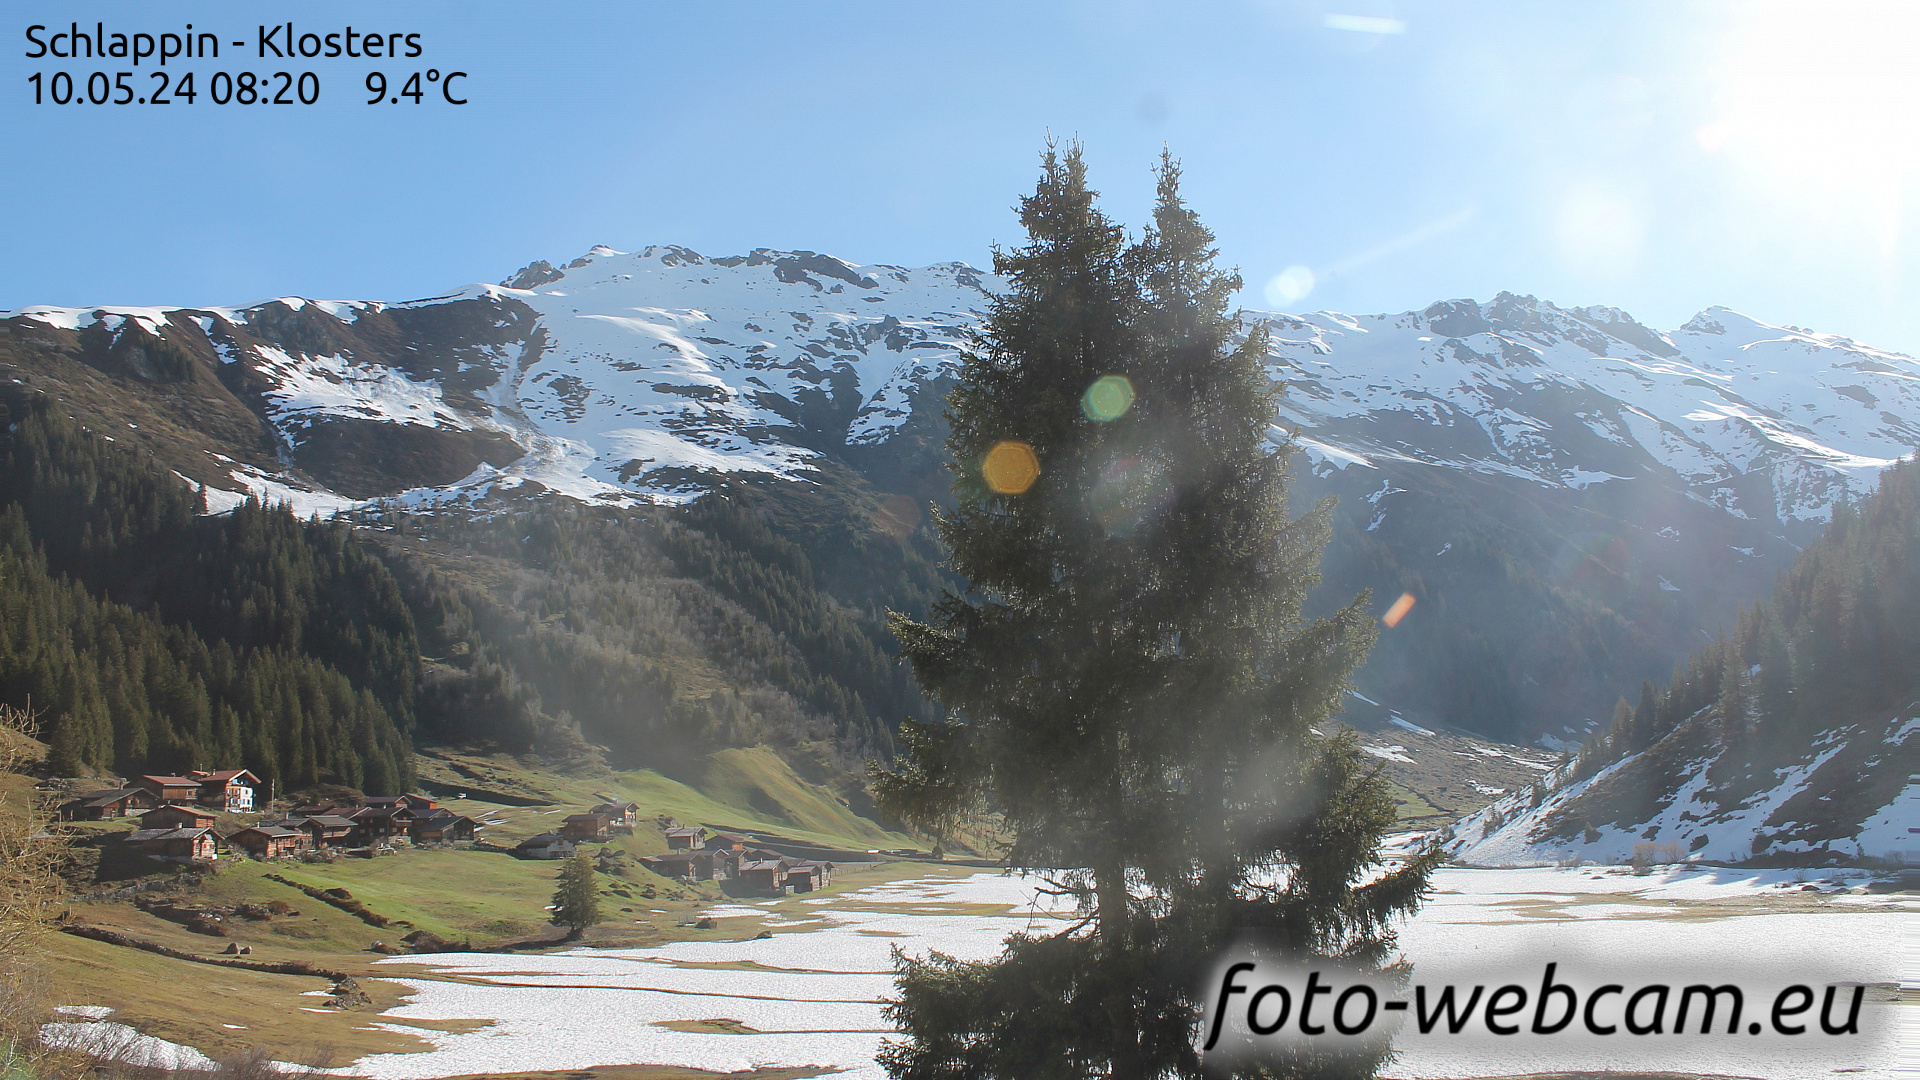 Klosters-Serneus Thu. 08:30